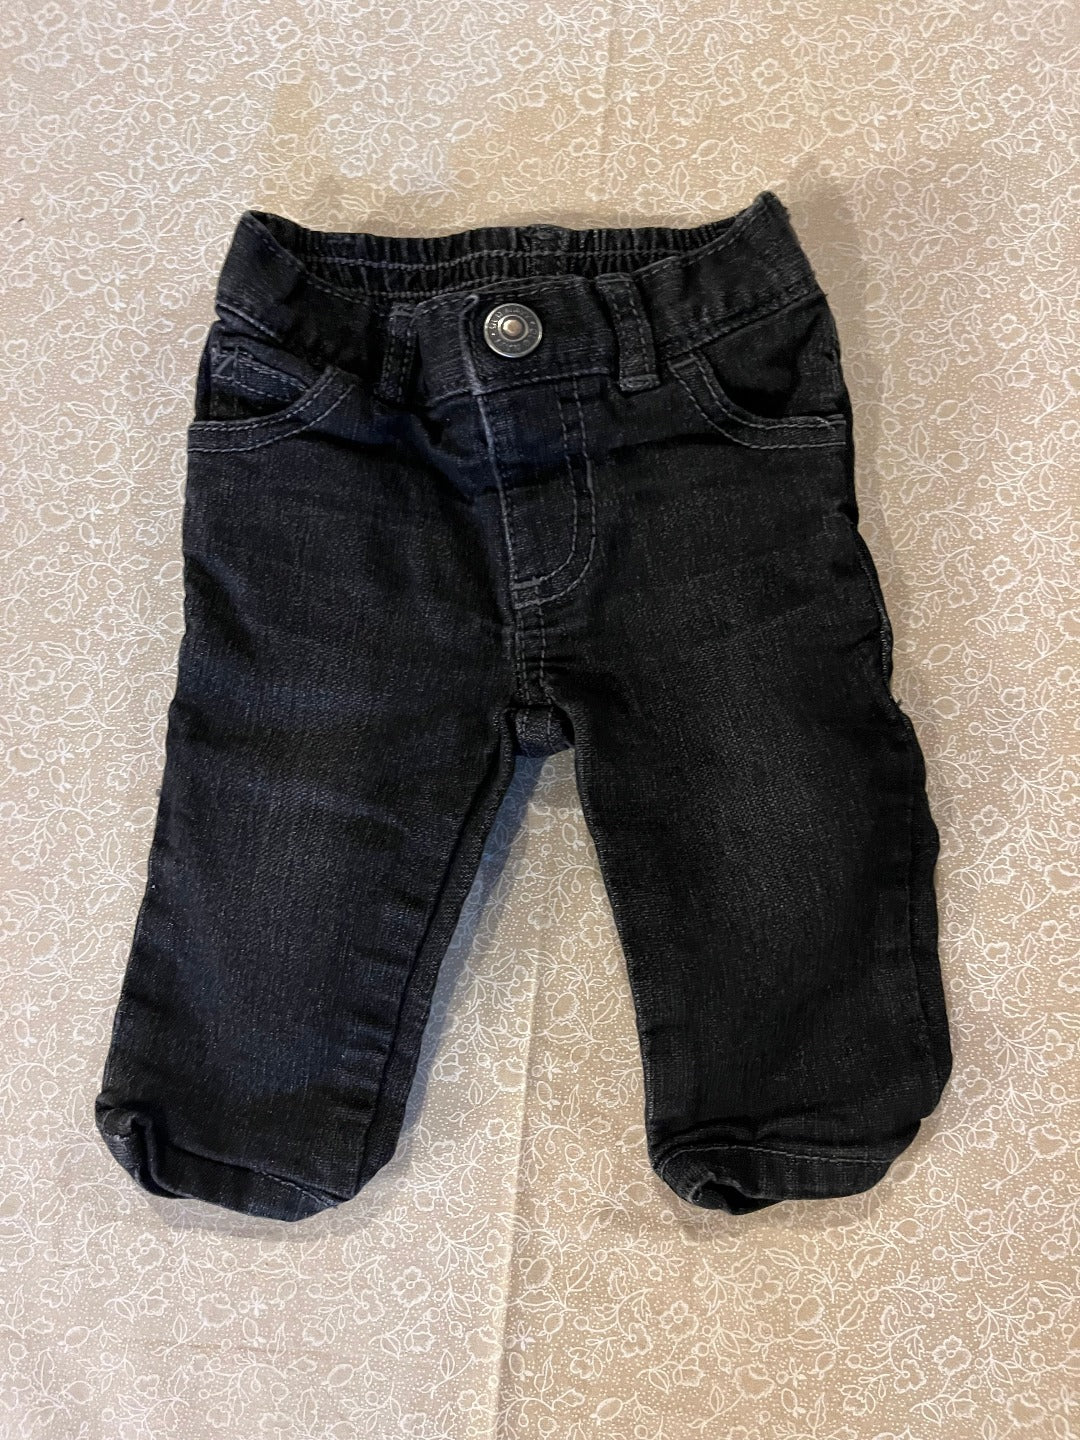 3-6-month-pants-old-navy-dark-jeans